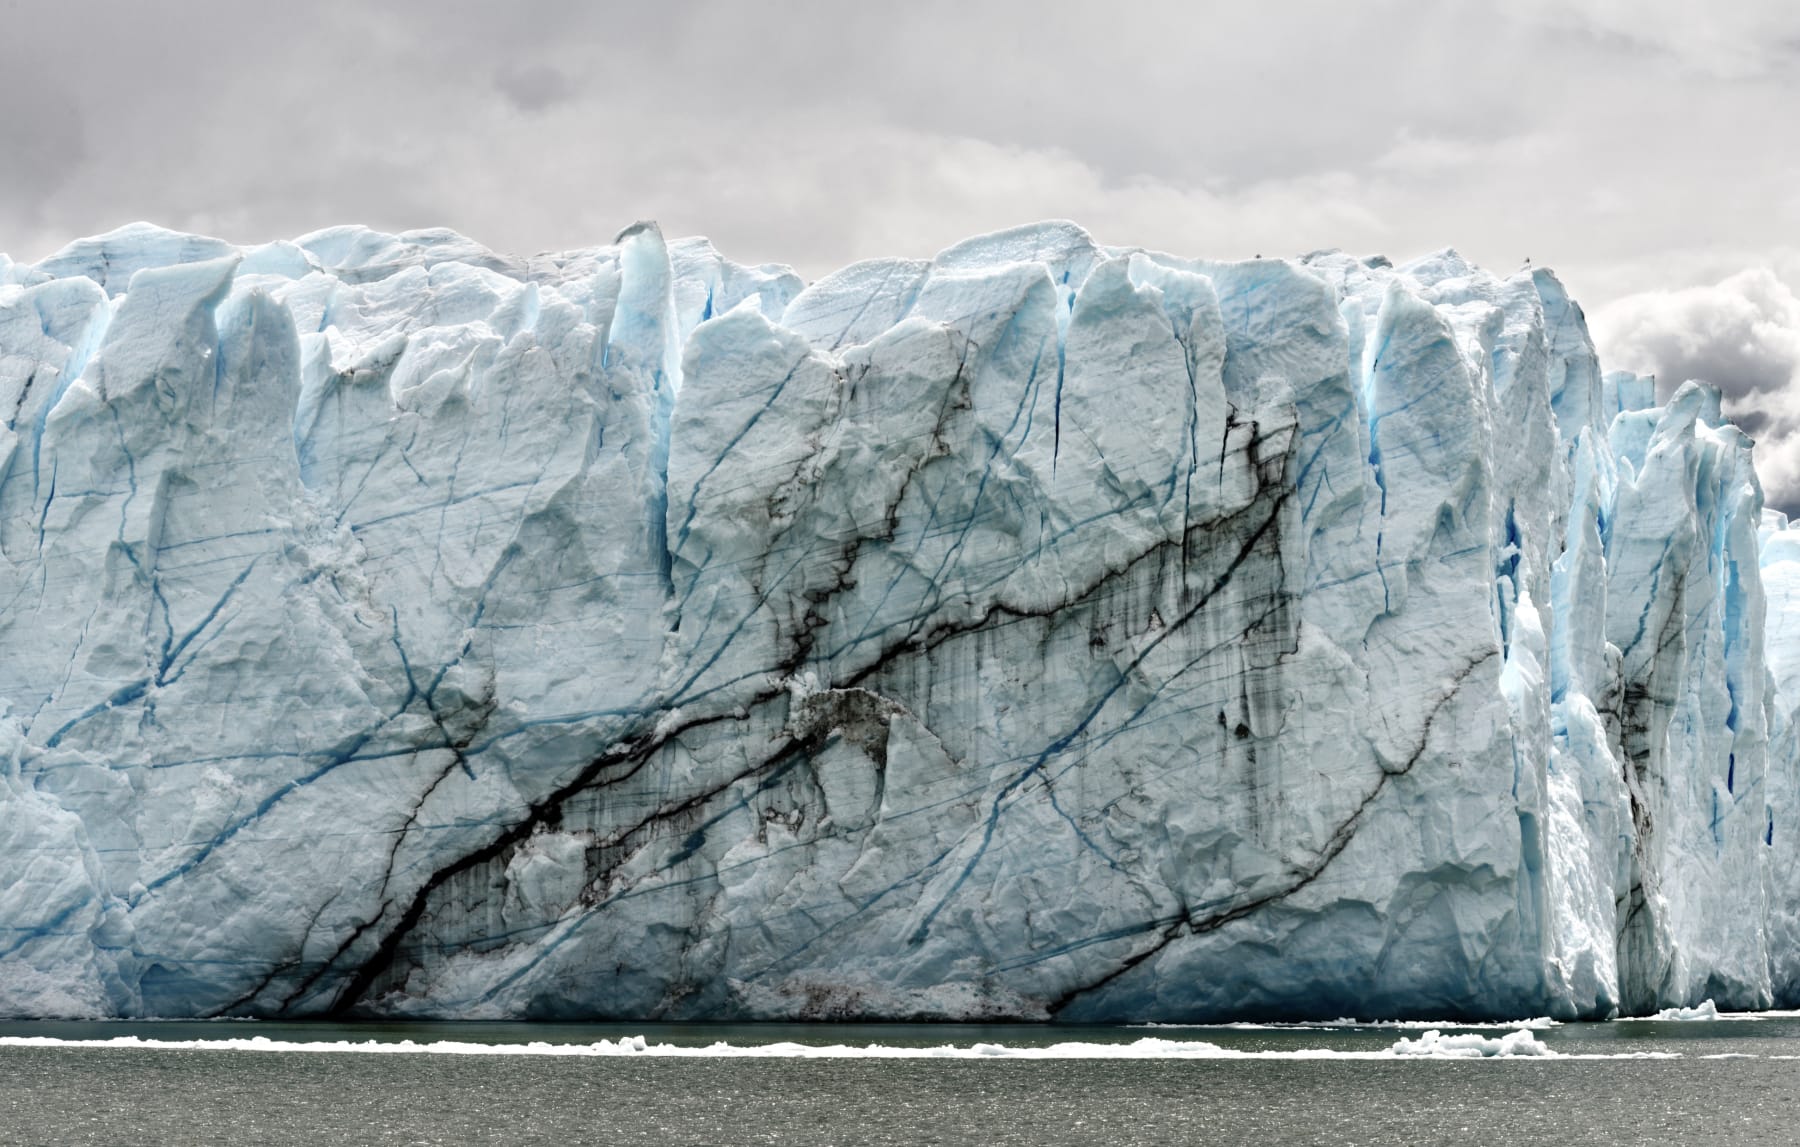 Glacier Wall (Patagonia), 2016